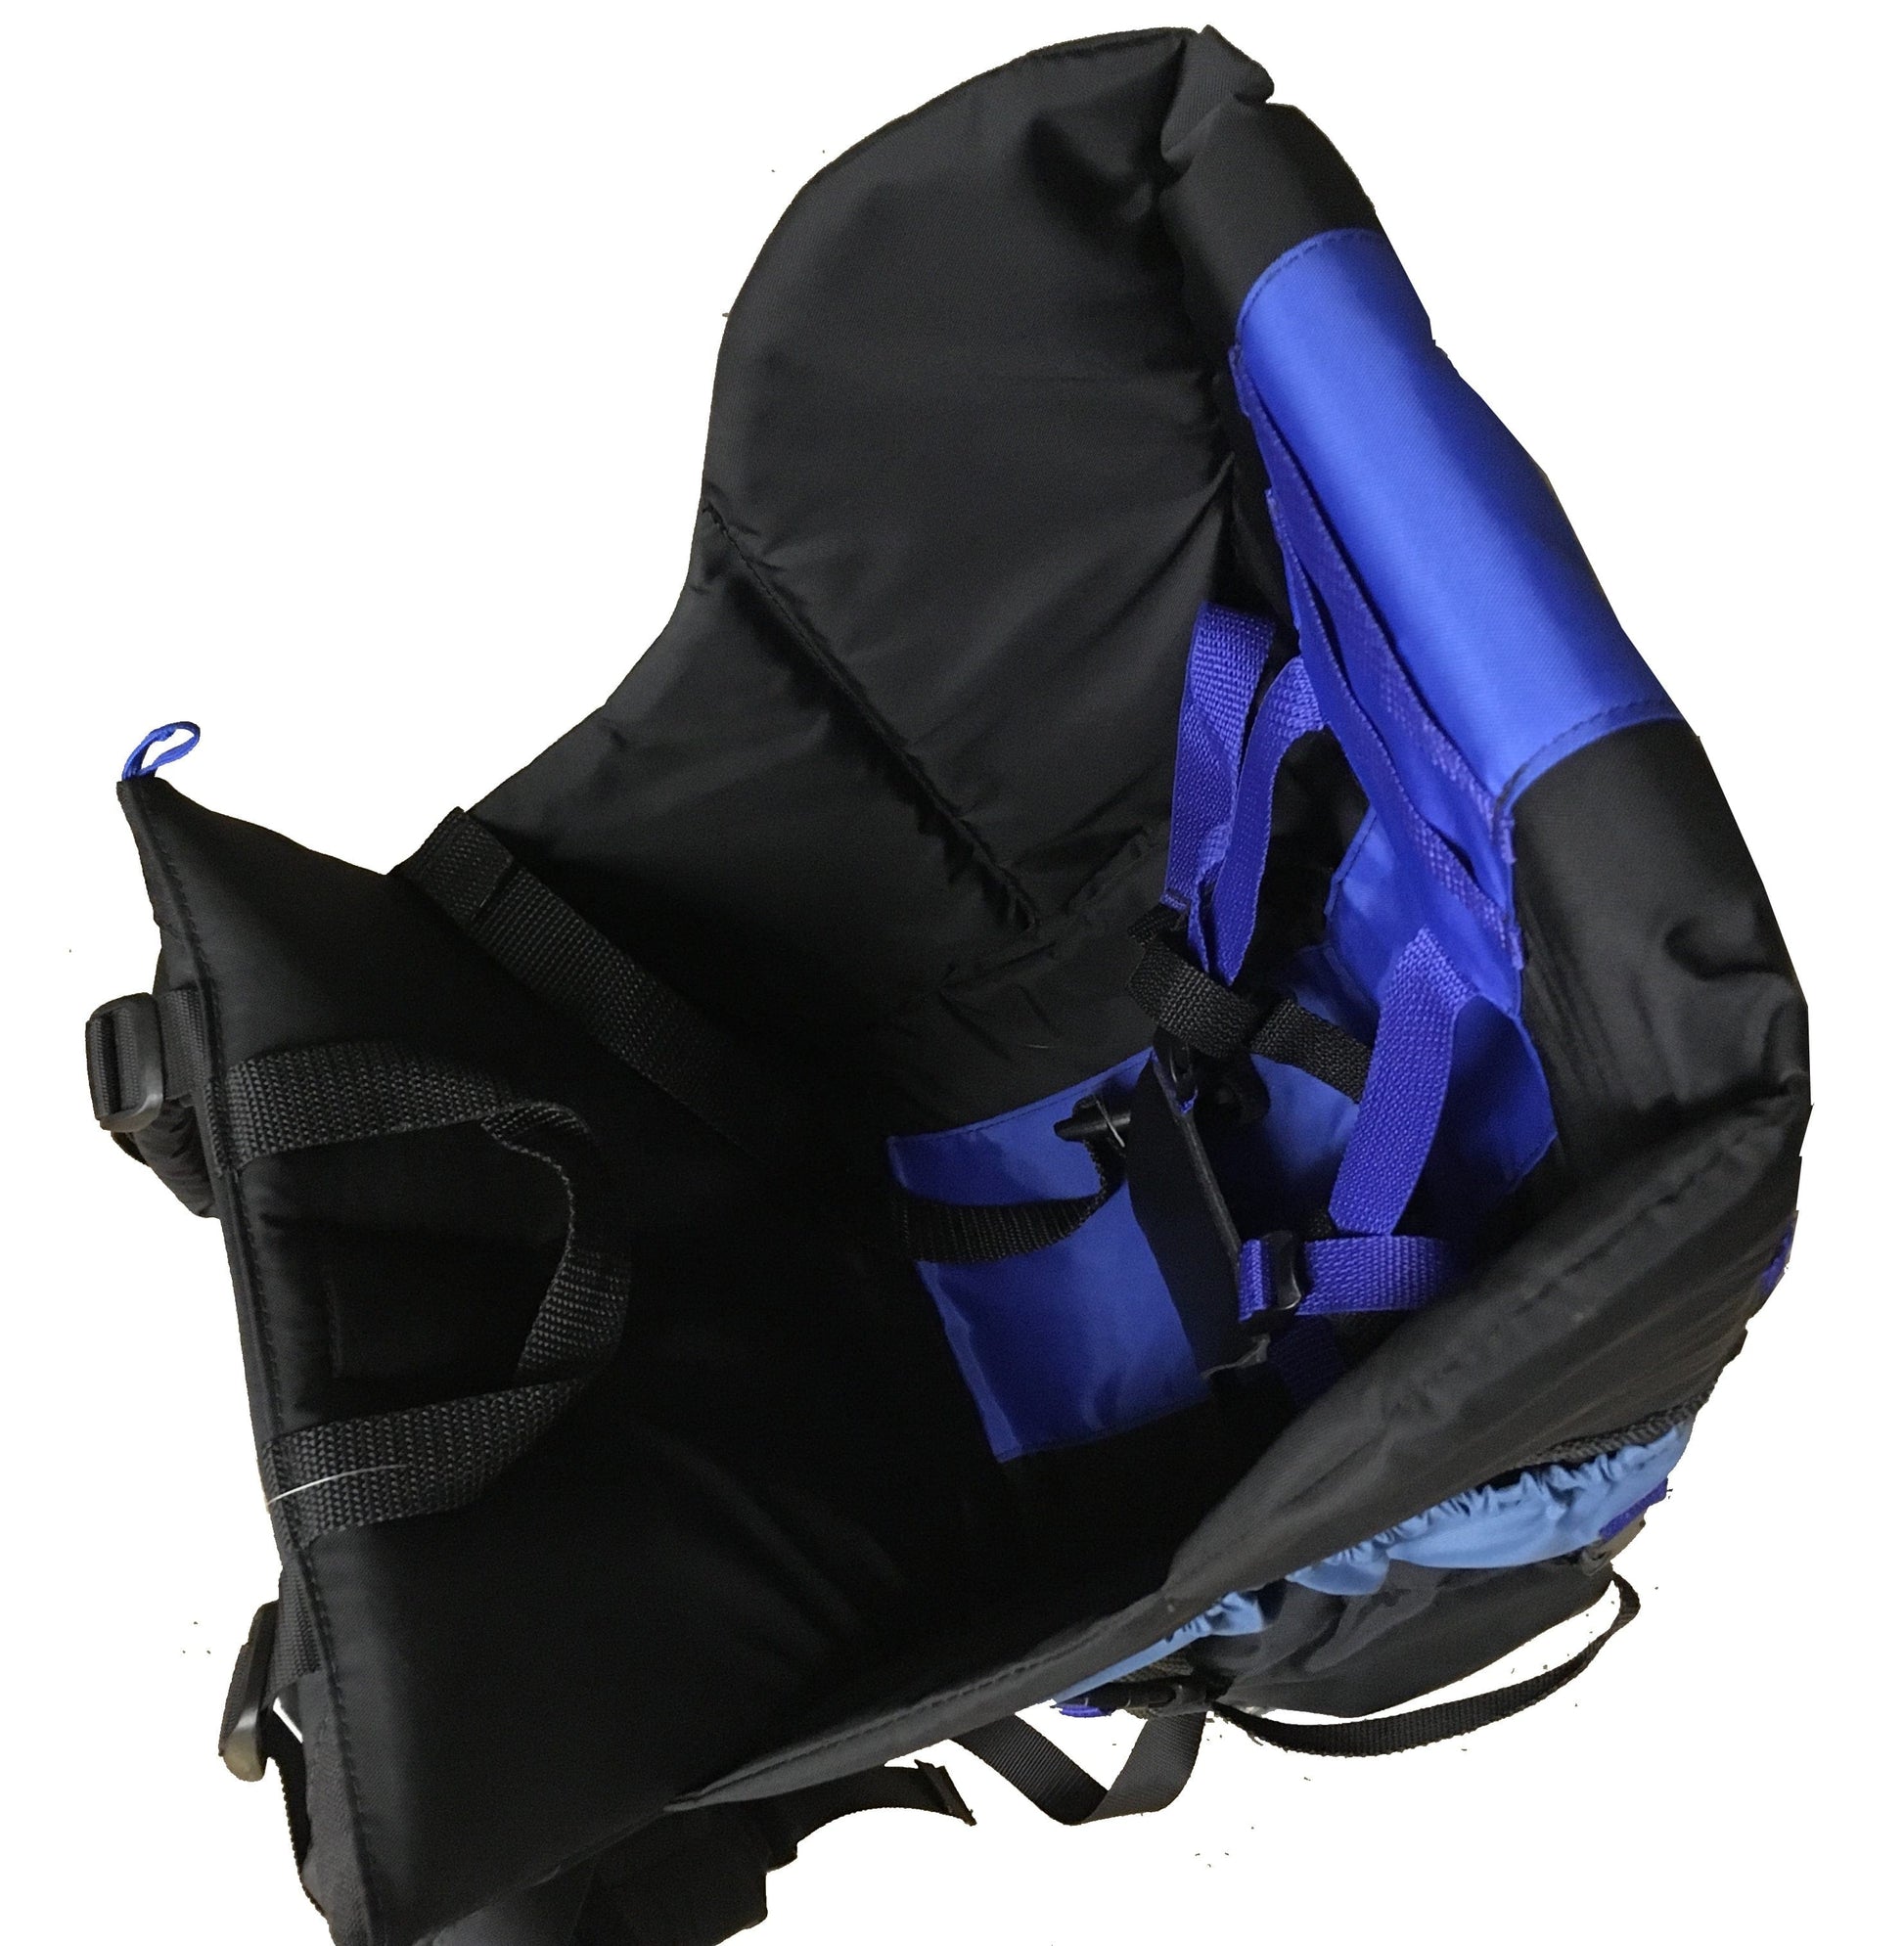 Get Fashion Backpack/ Travel Bag f Online Price in Sri Lanka